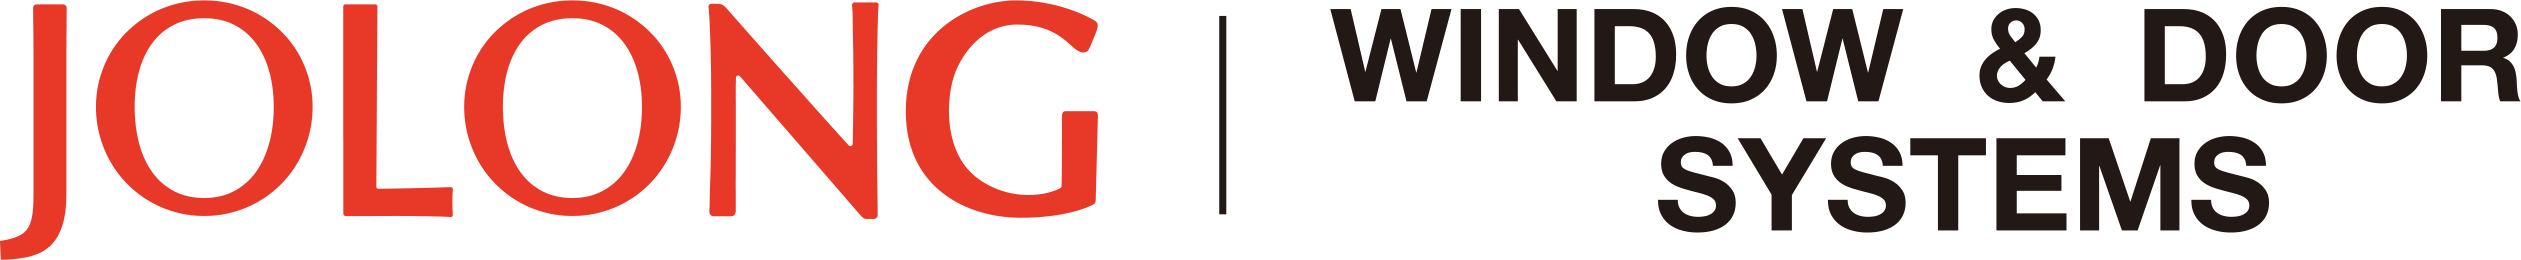 Jolong logo